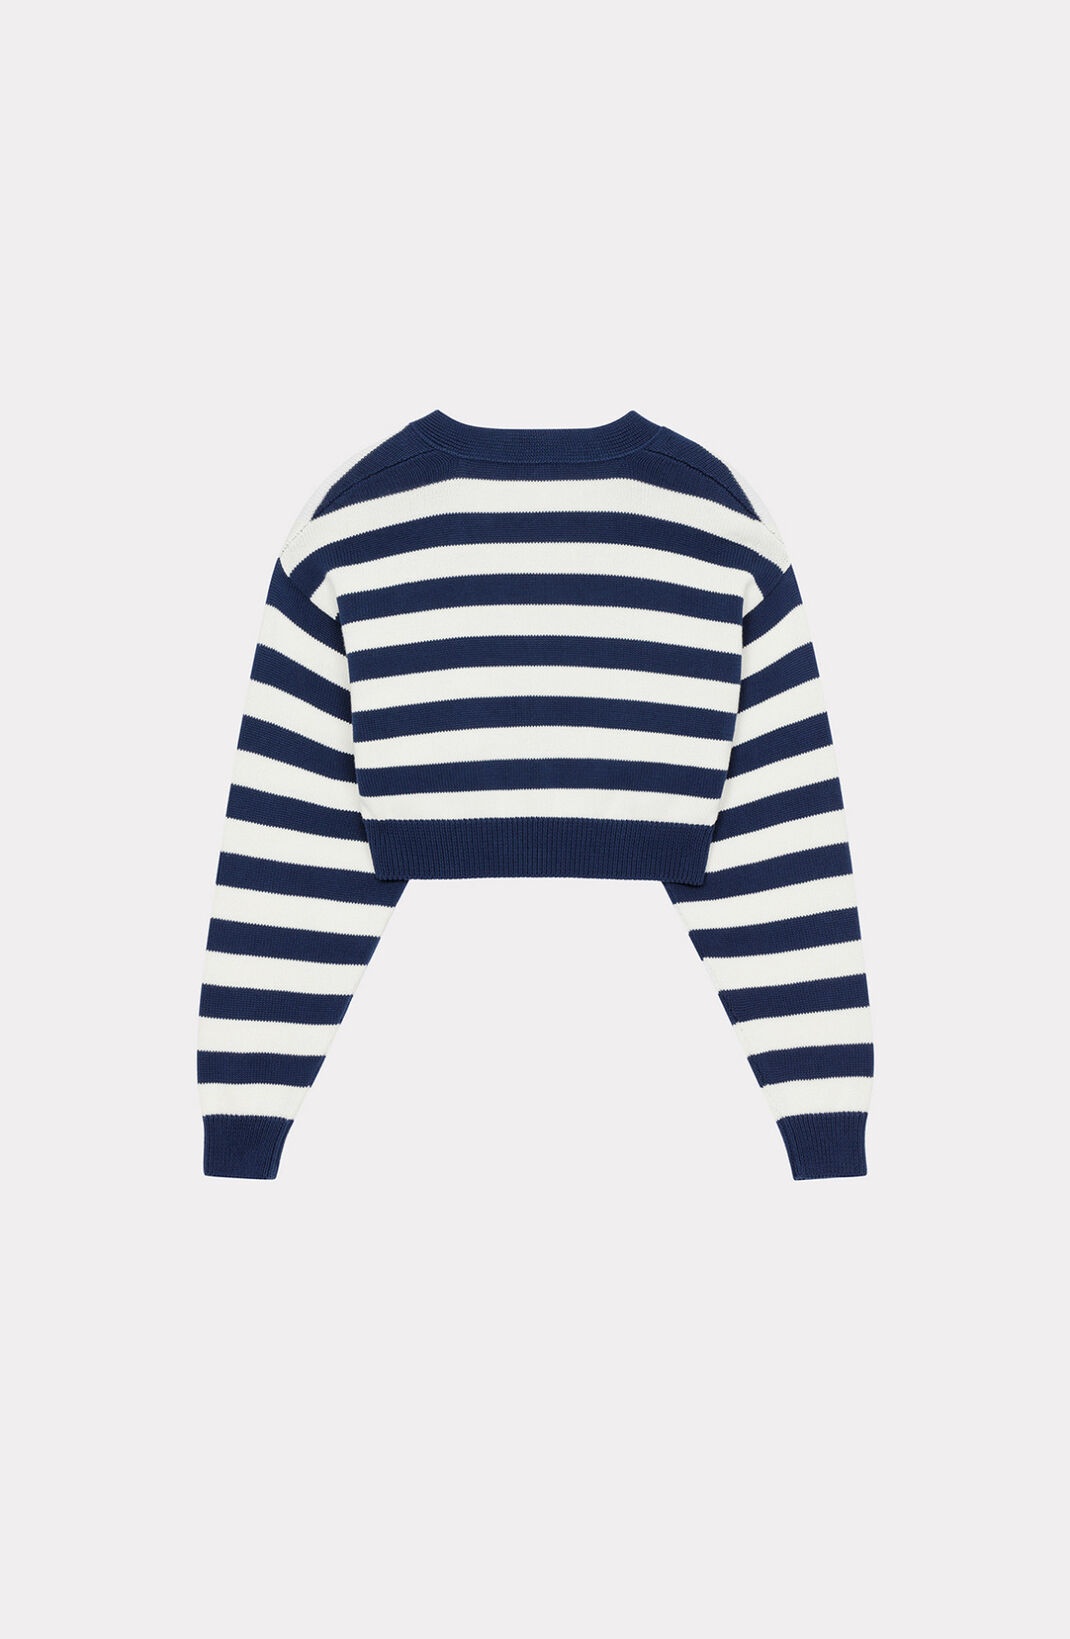 'Nautical stripes' cardigan - 2